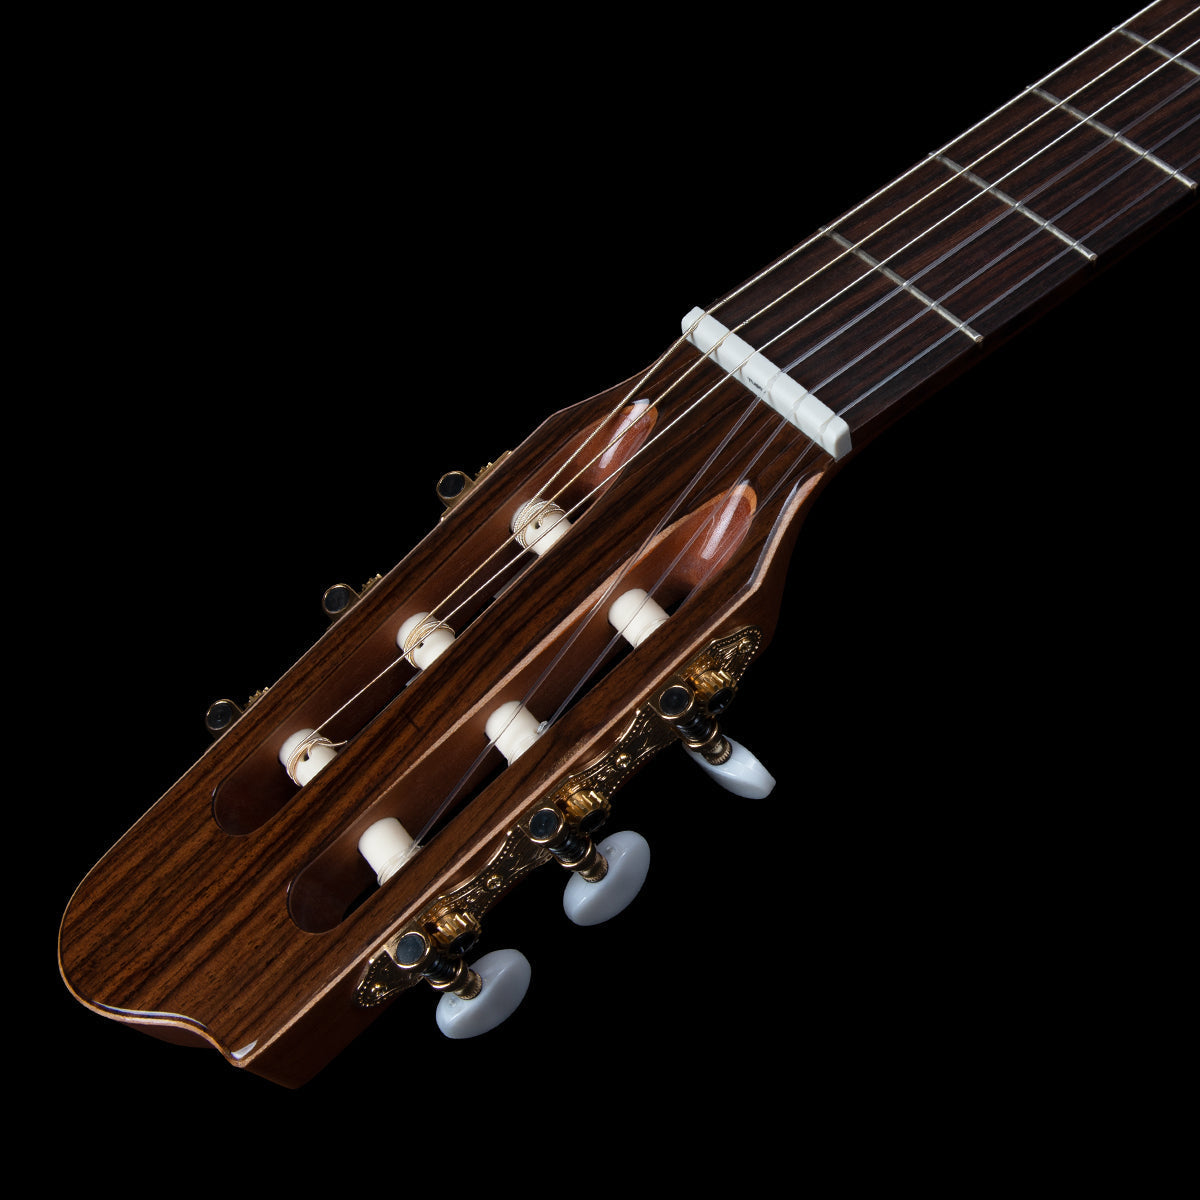 Godin Concert Nylon String Guitar ~ Left Hand, Acoustic Guitar for sale at Richards Guitars.